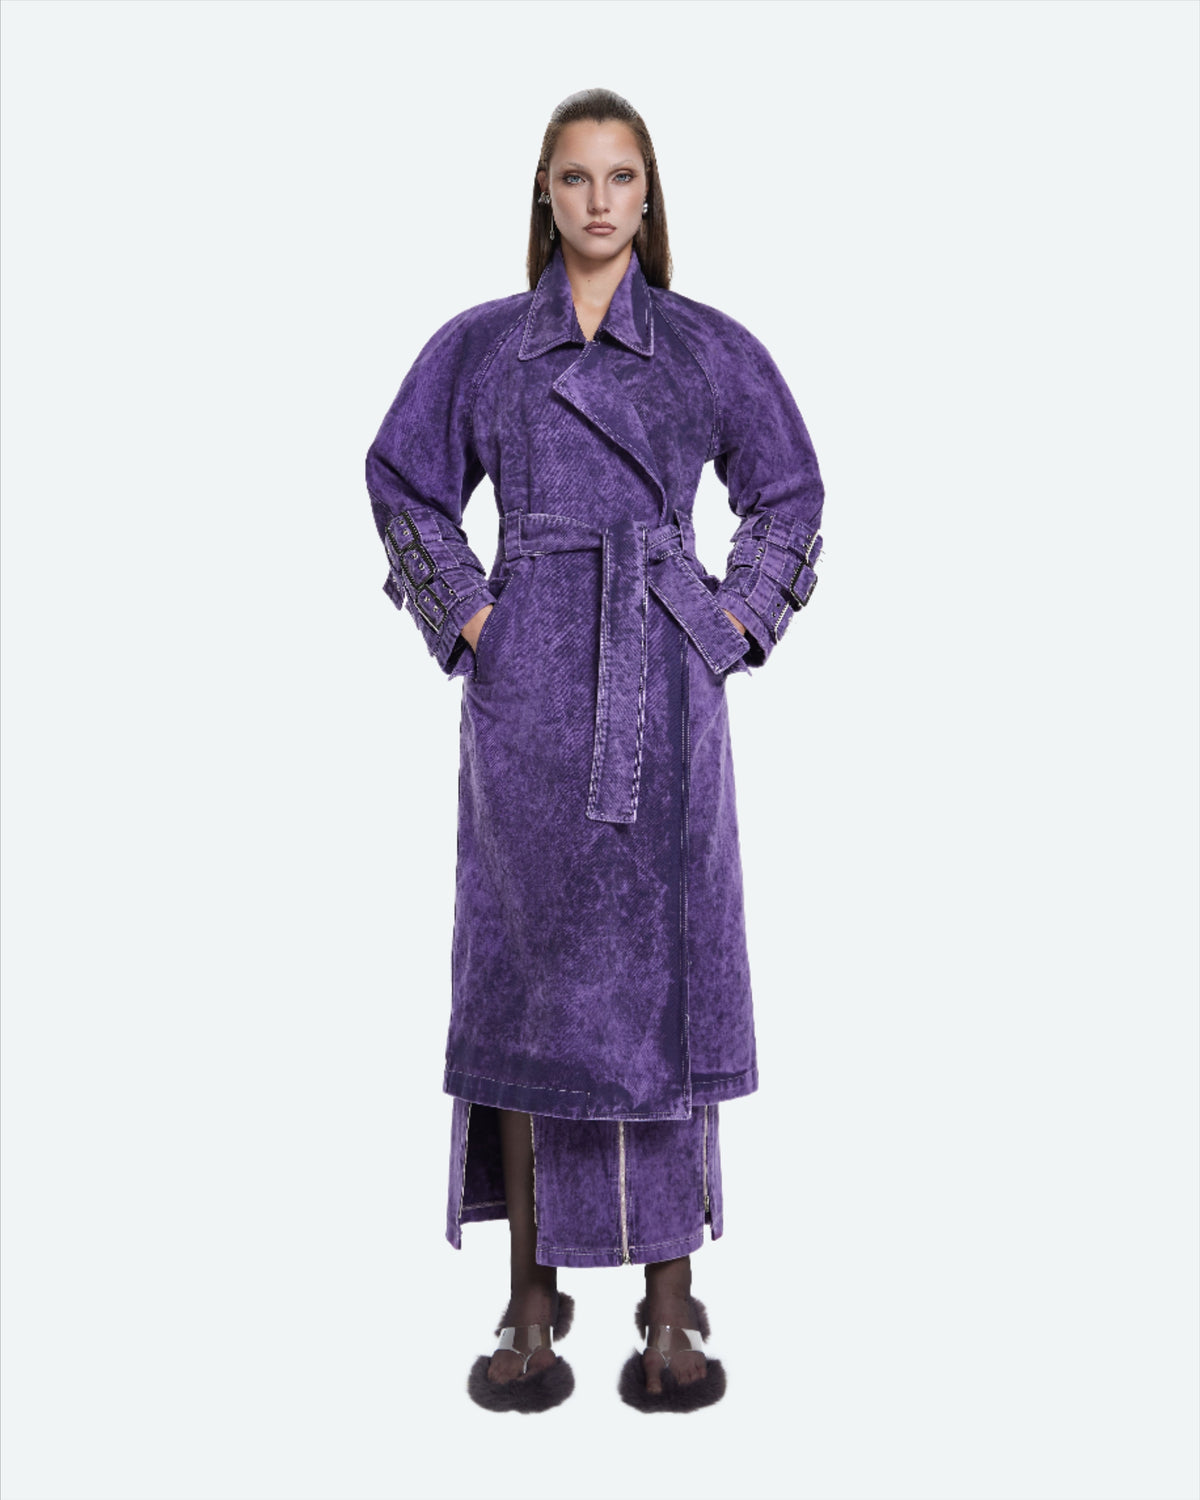 Voidwalker Trench Coat in Purple Acid Wash